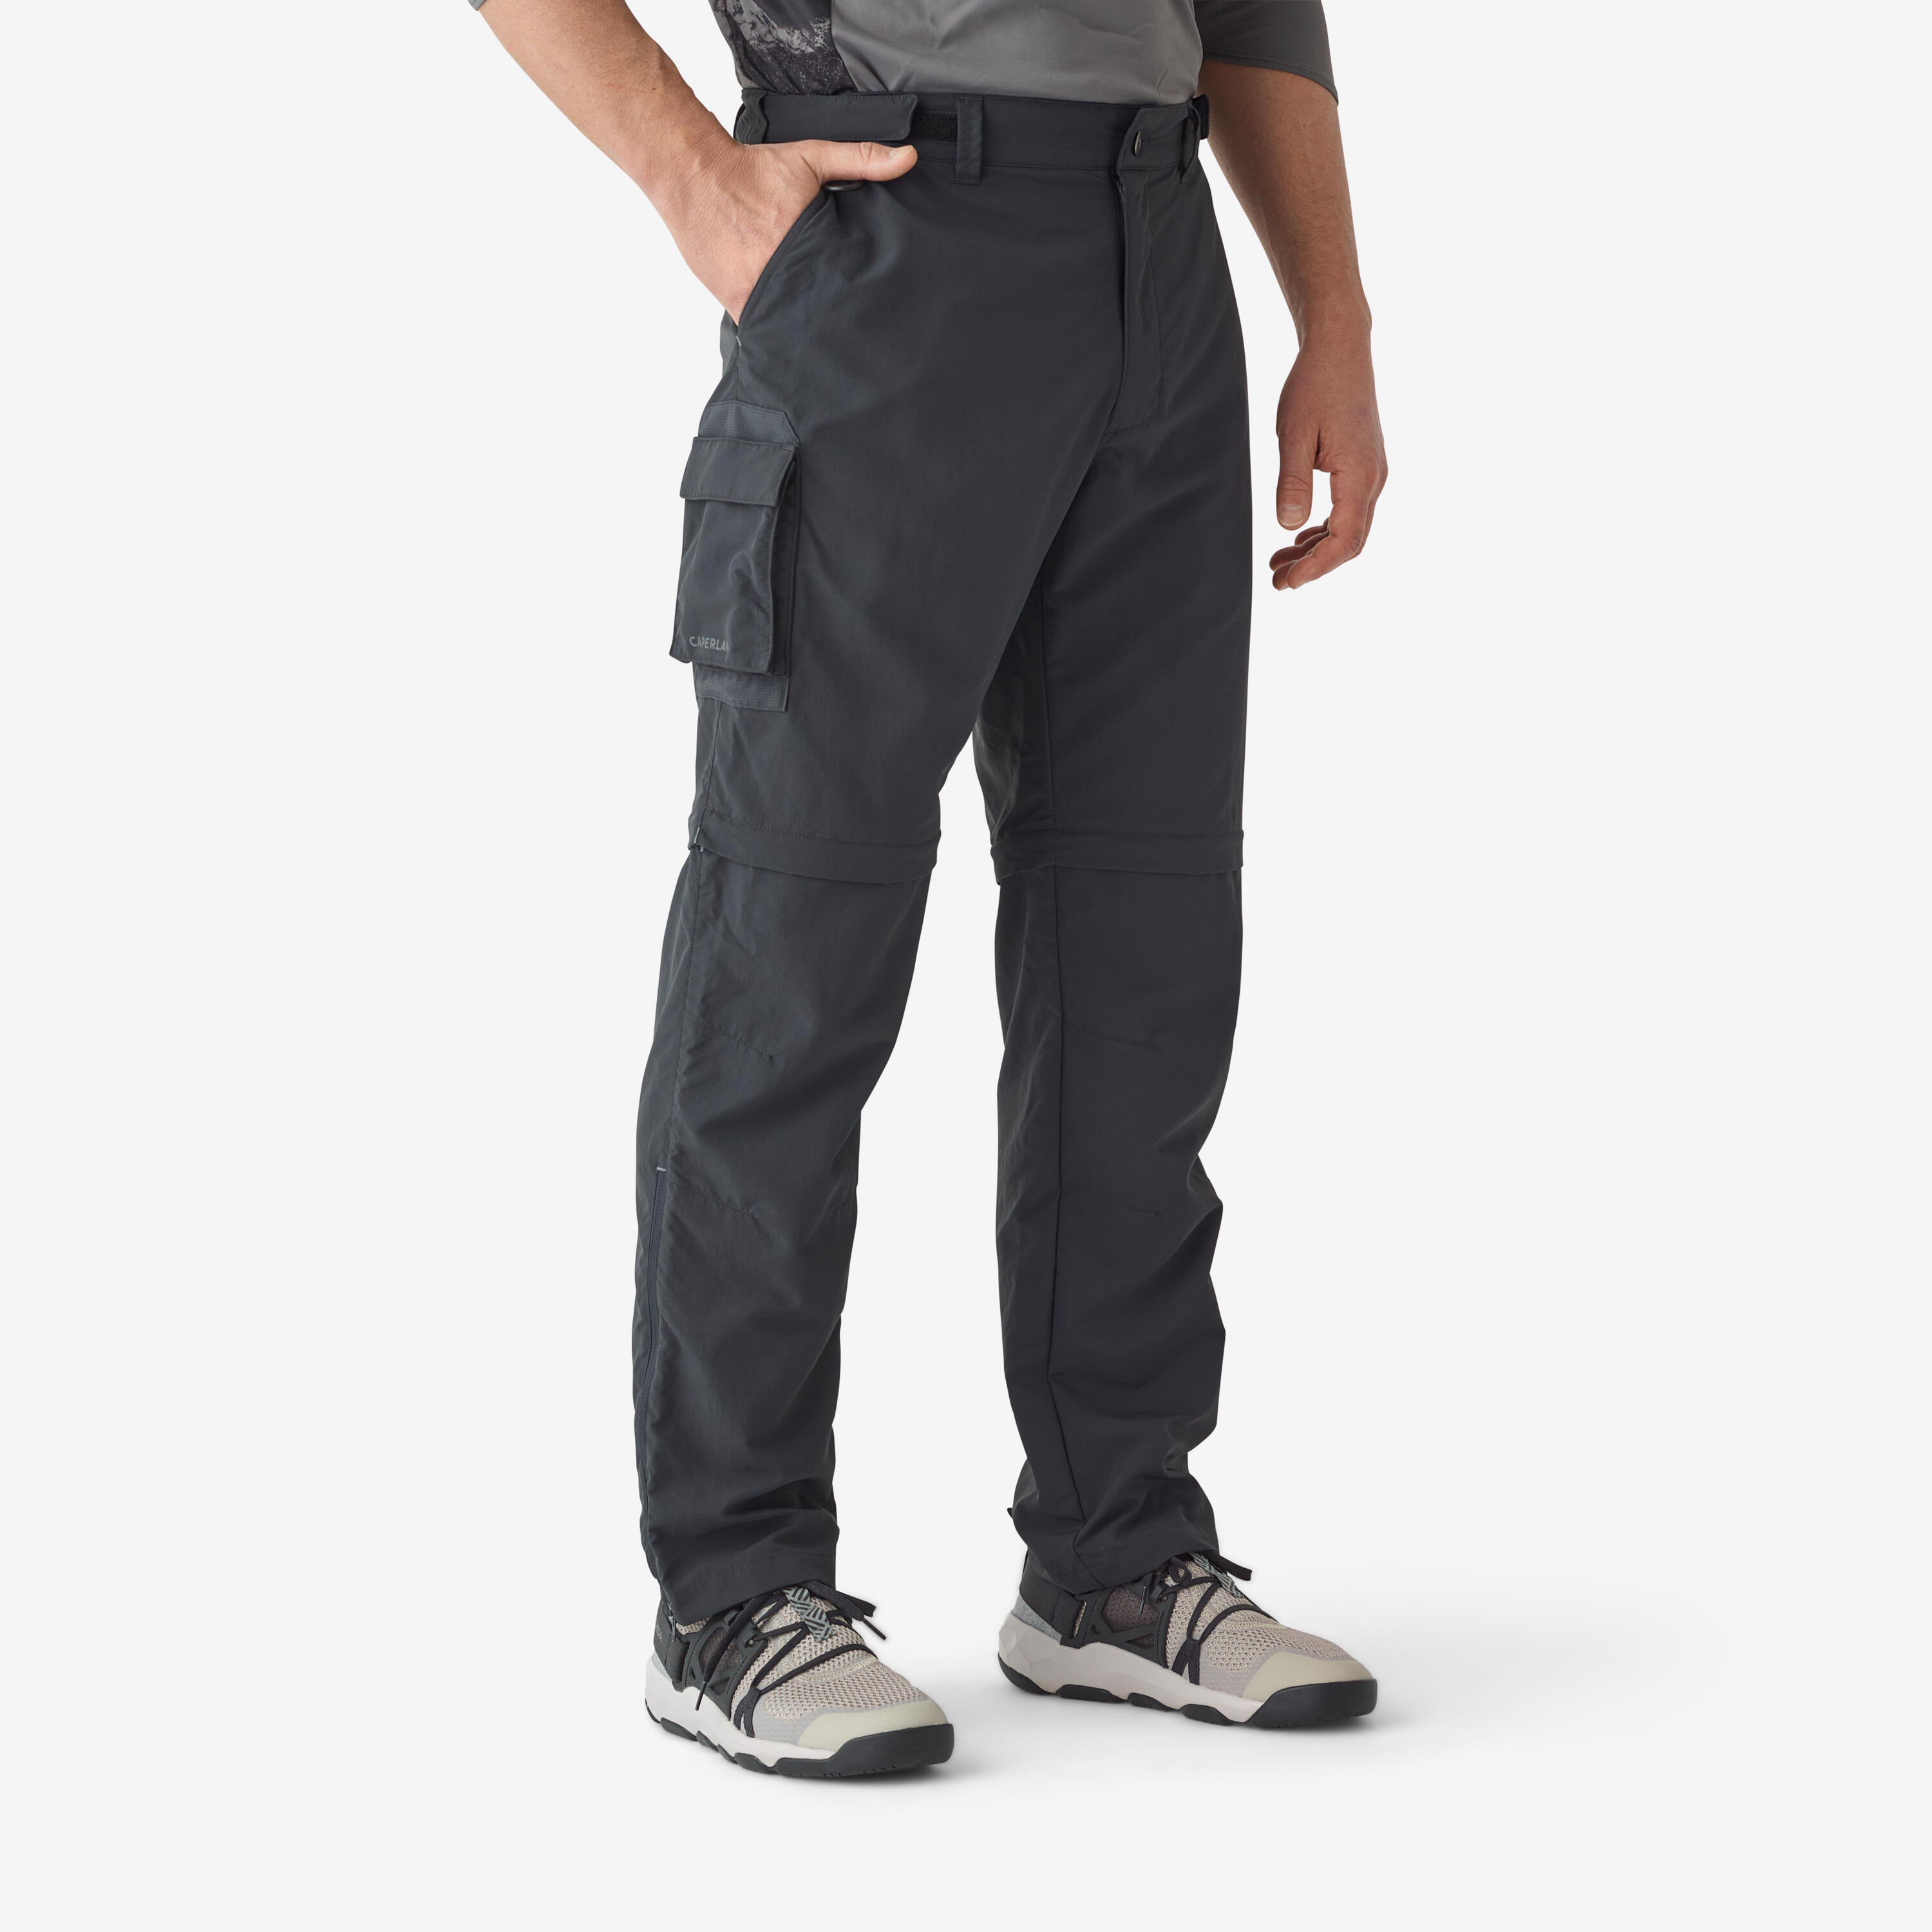 CAPERLAN Fishing convertible trousers UPF50+ Men's - FT 500 ANTI-UV grey